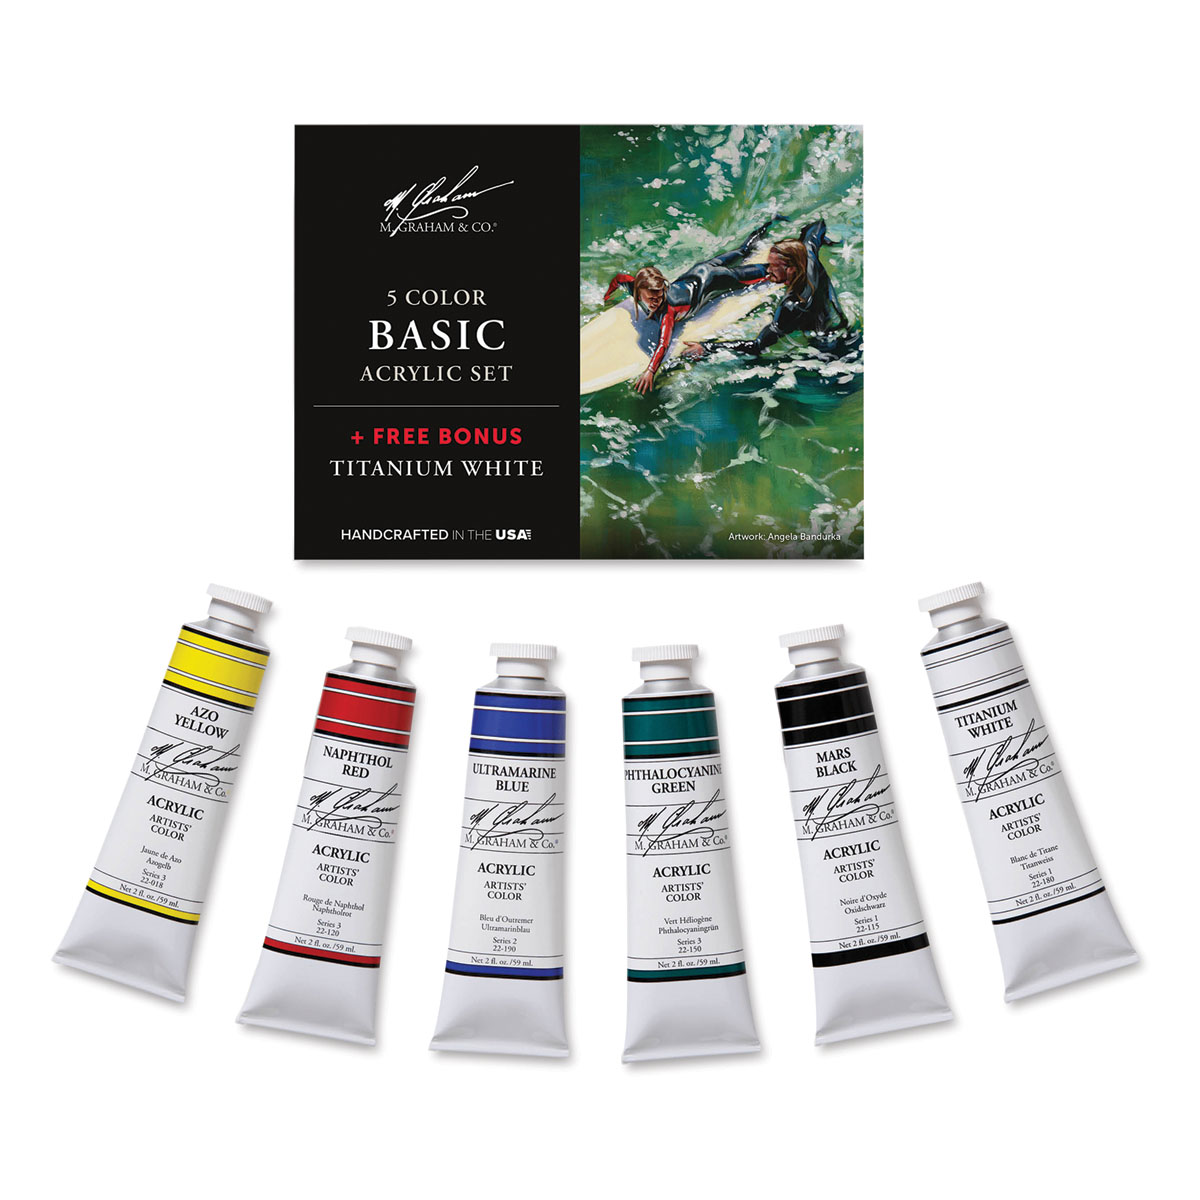  Angelus Leather Paint Kit- Basics Starter Kit Includes 5  Paints